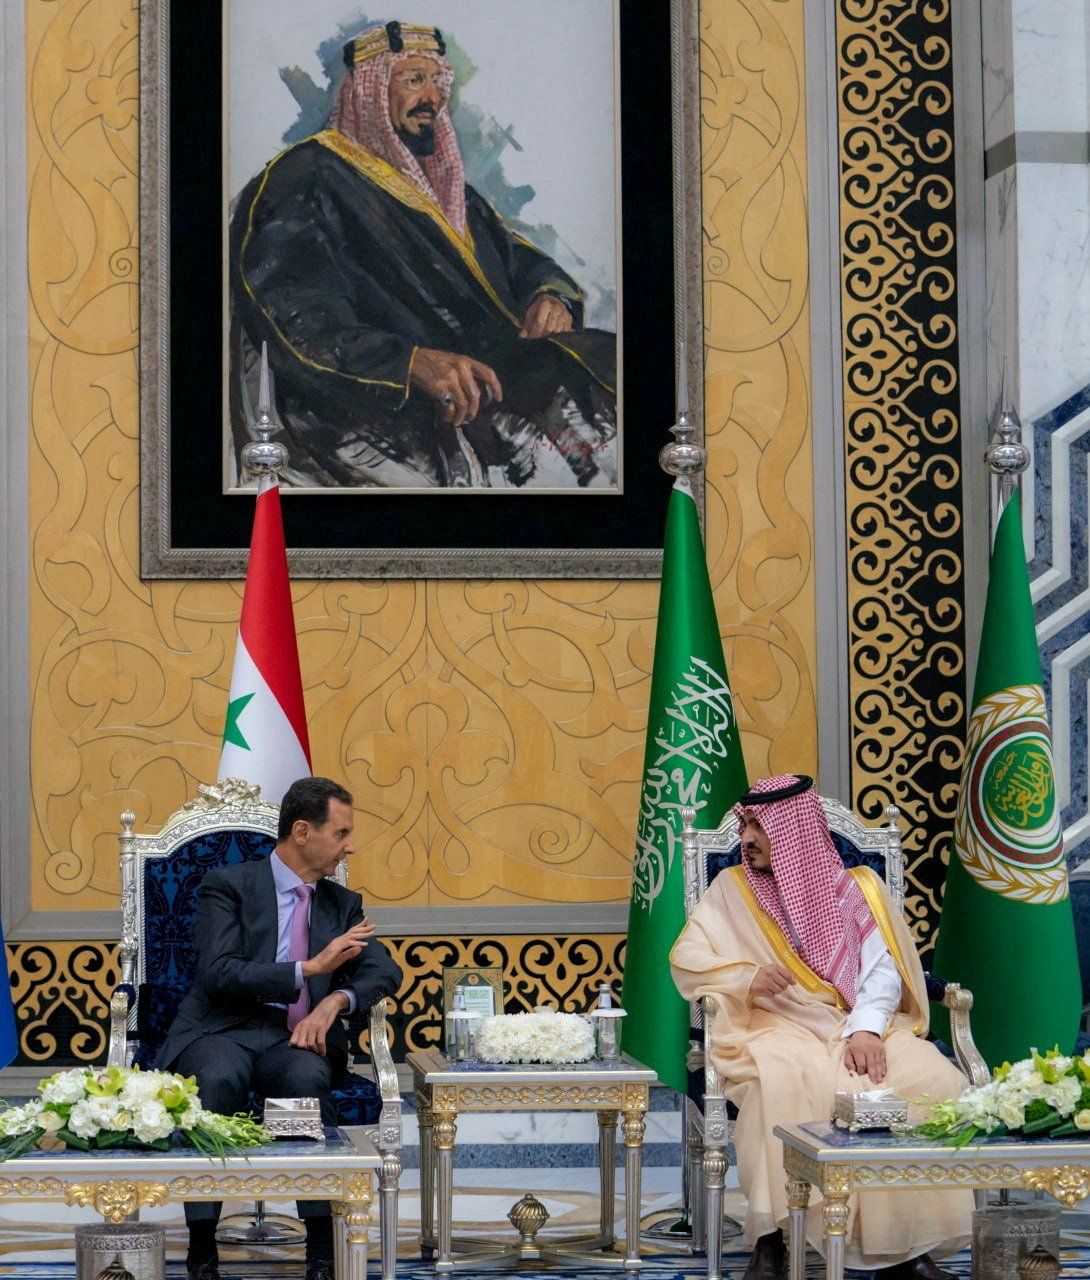 Syria's President Bashar al-Assad chats with Prince Badr bin Sultan bin Abdulaziz